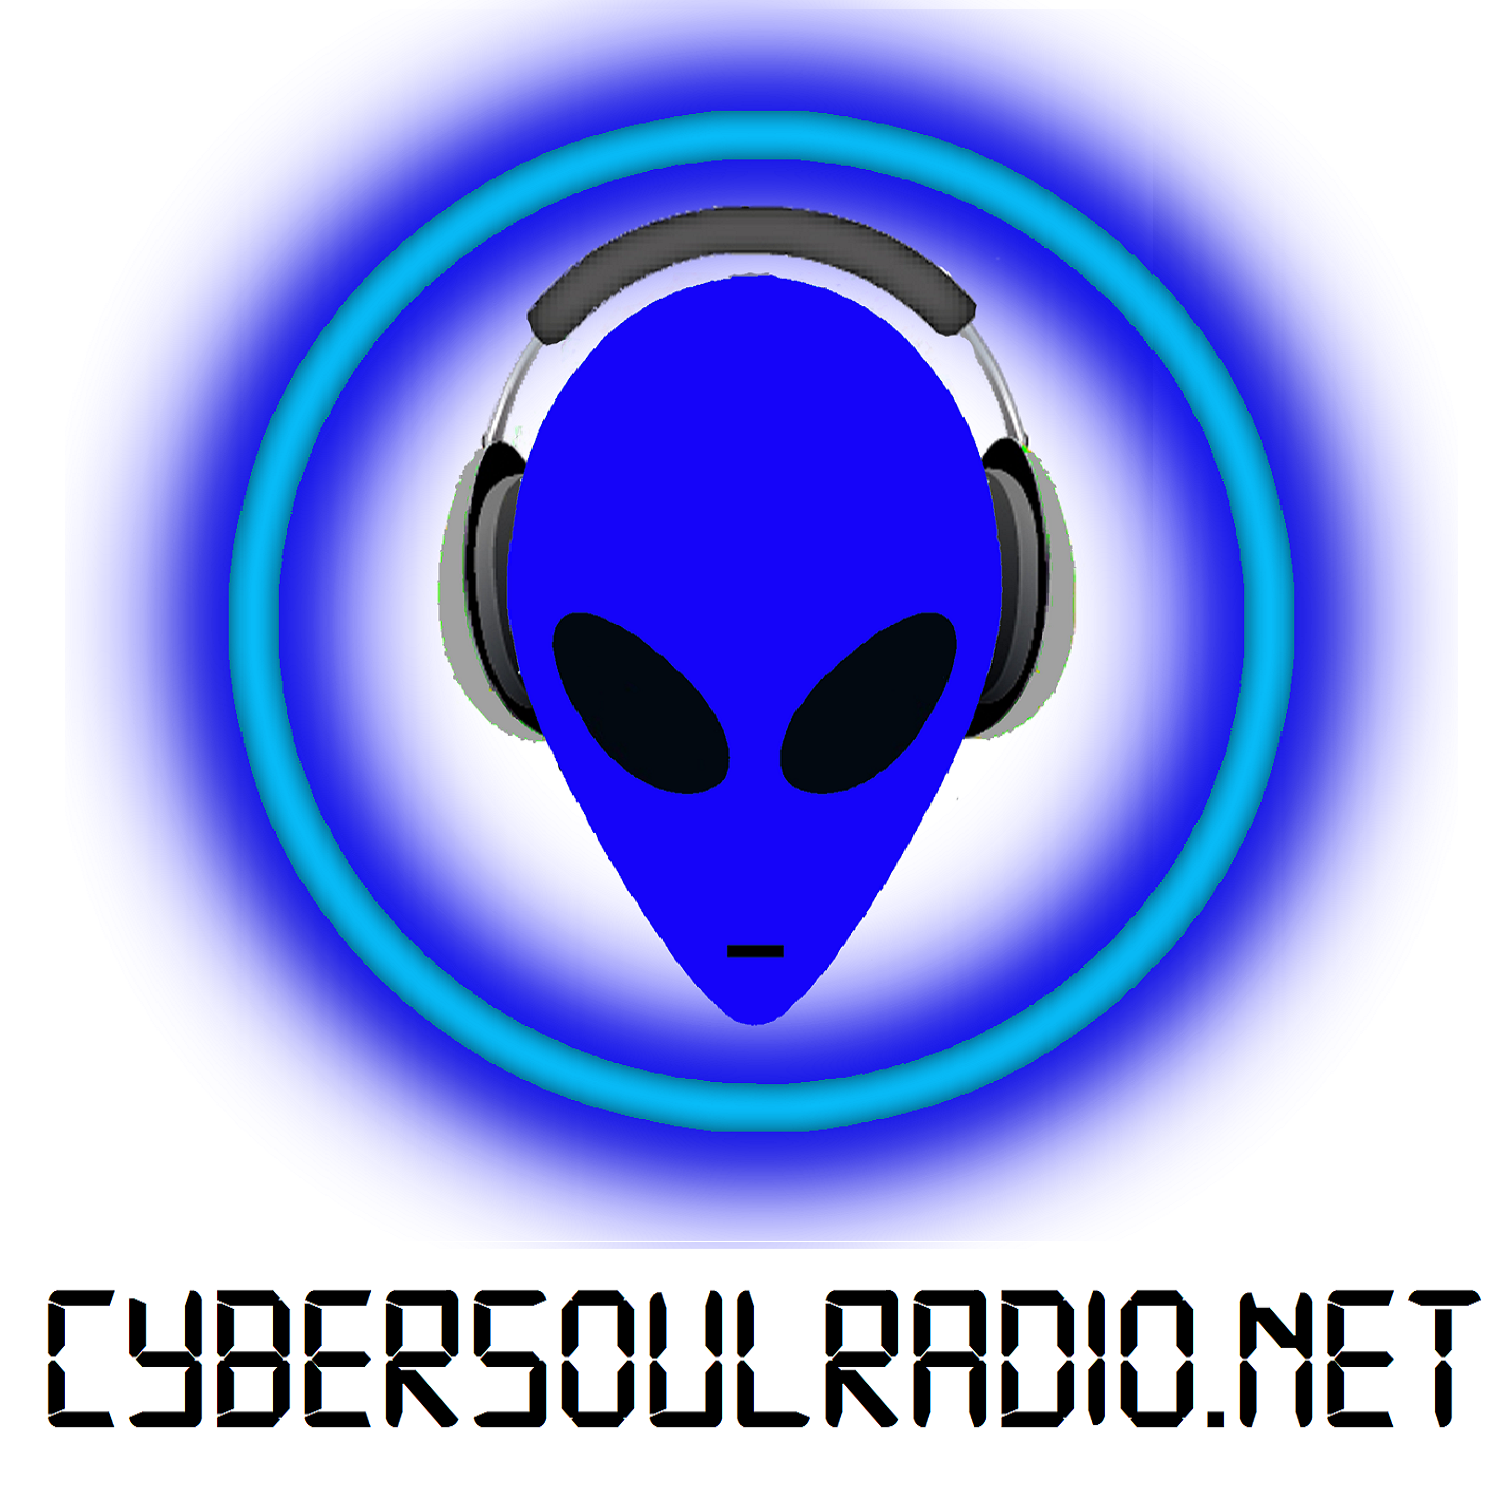 Cyber Soul Radio